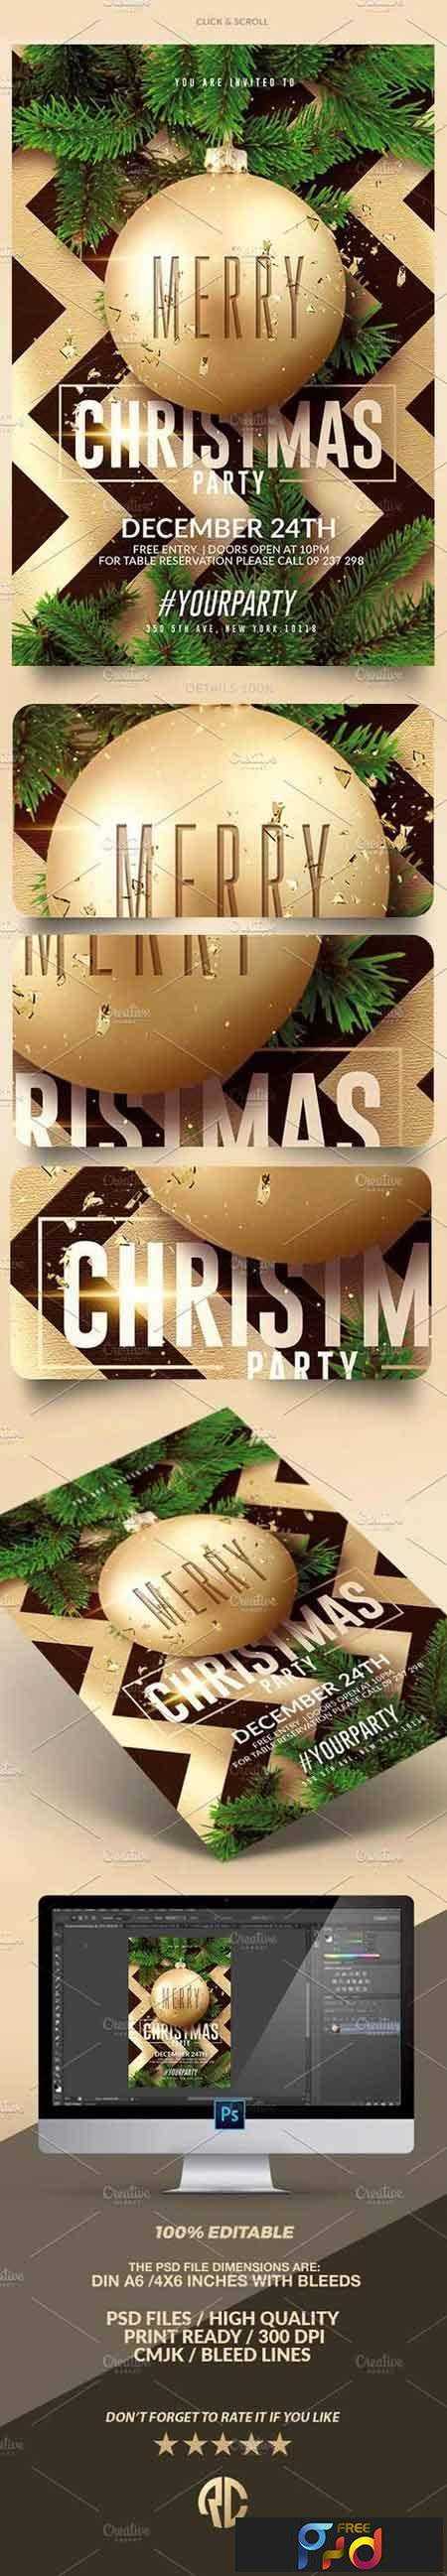 freepsdvn-com_1480392045_christmas-party-flyer-template-1070487